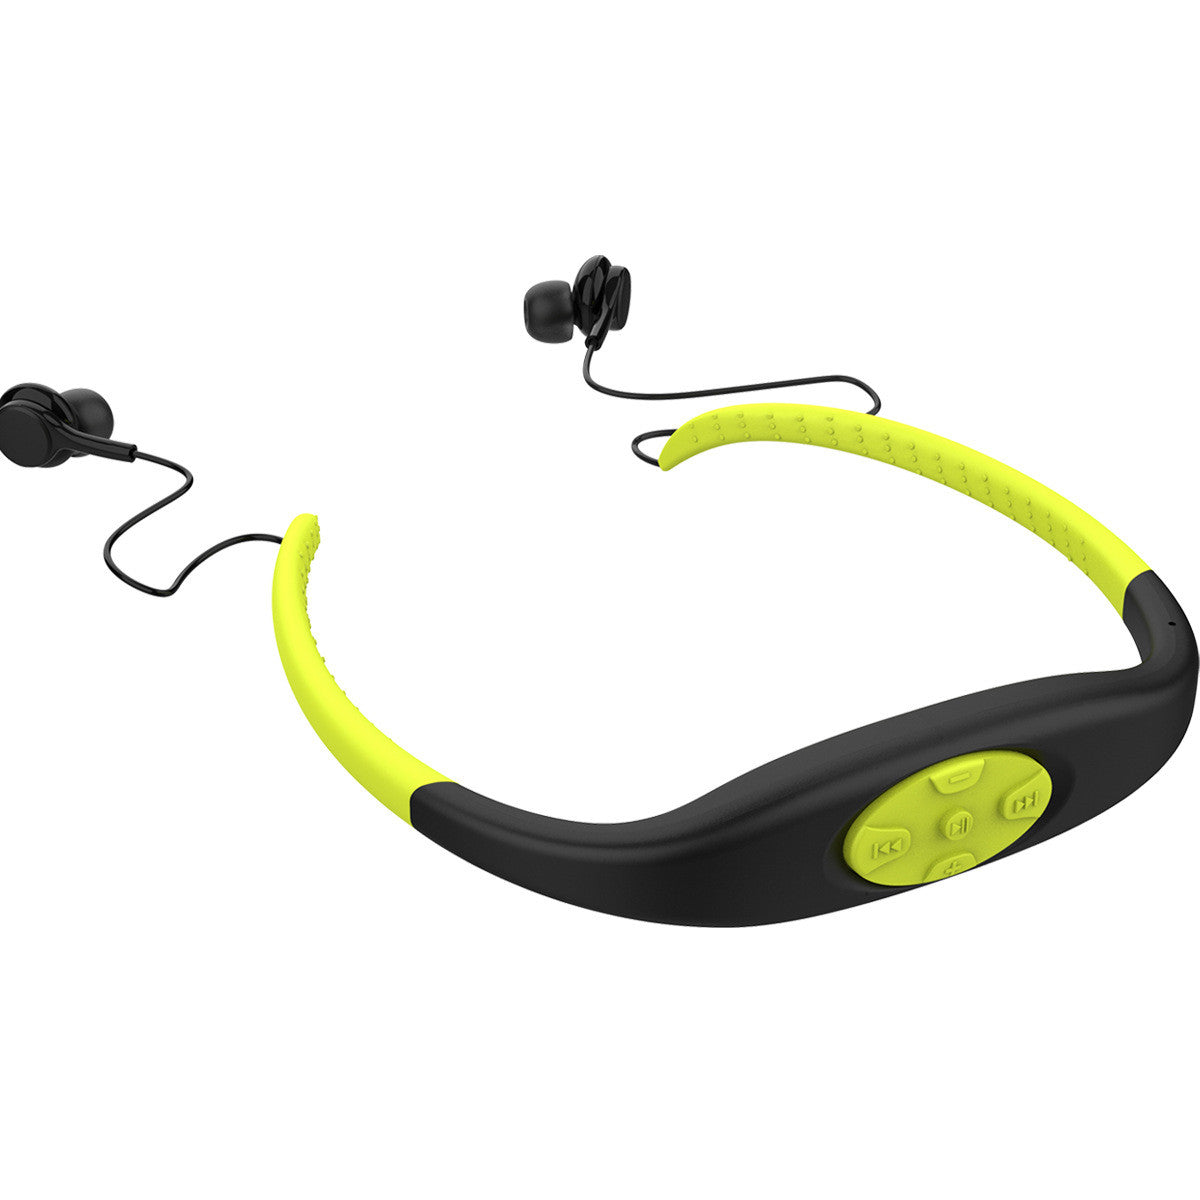 2in1 Bluetooth Wireless Earphone &MP3 Music Player 8G Headphone IPX8 Waterproof Swim Sport Neckband Stereo Headset with Mic